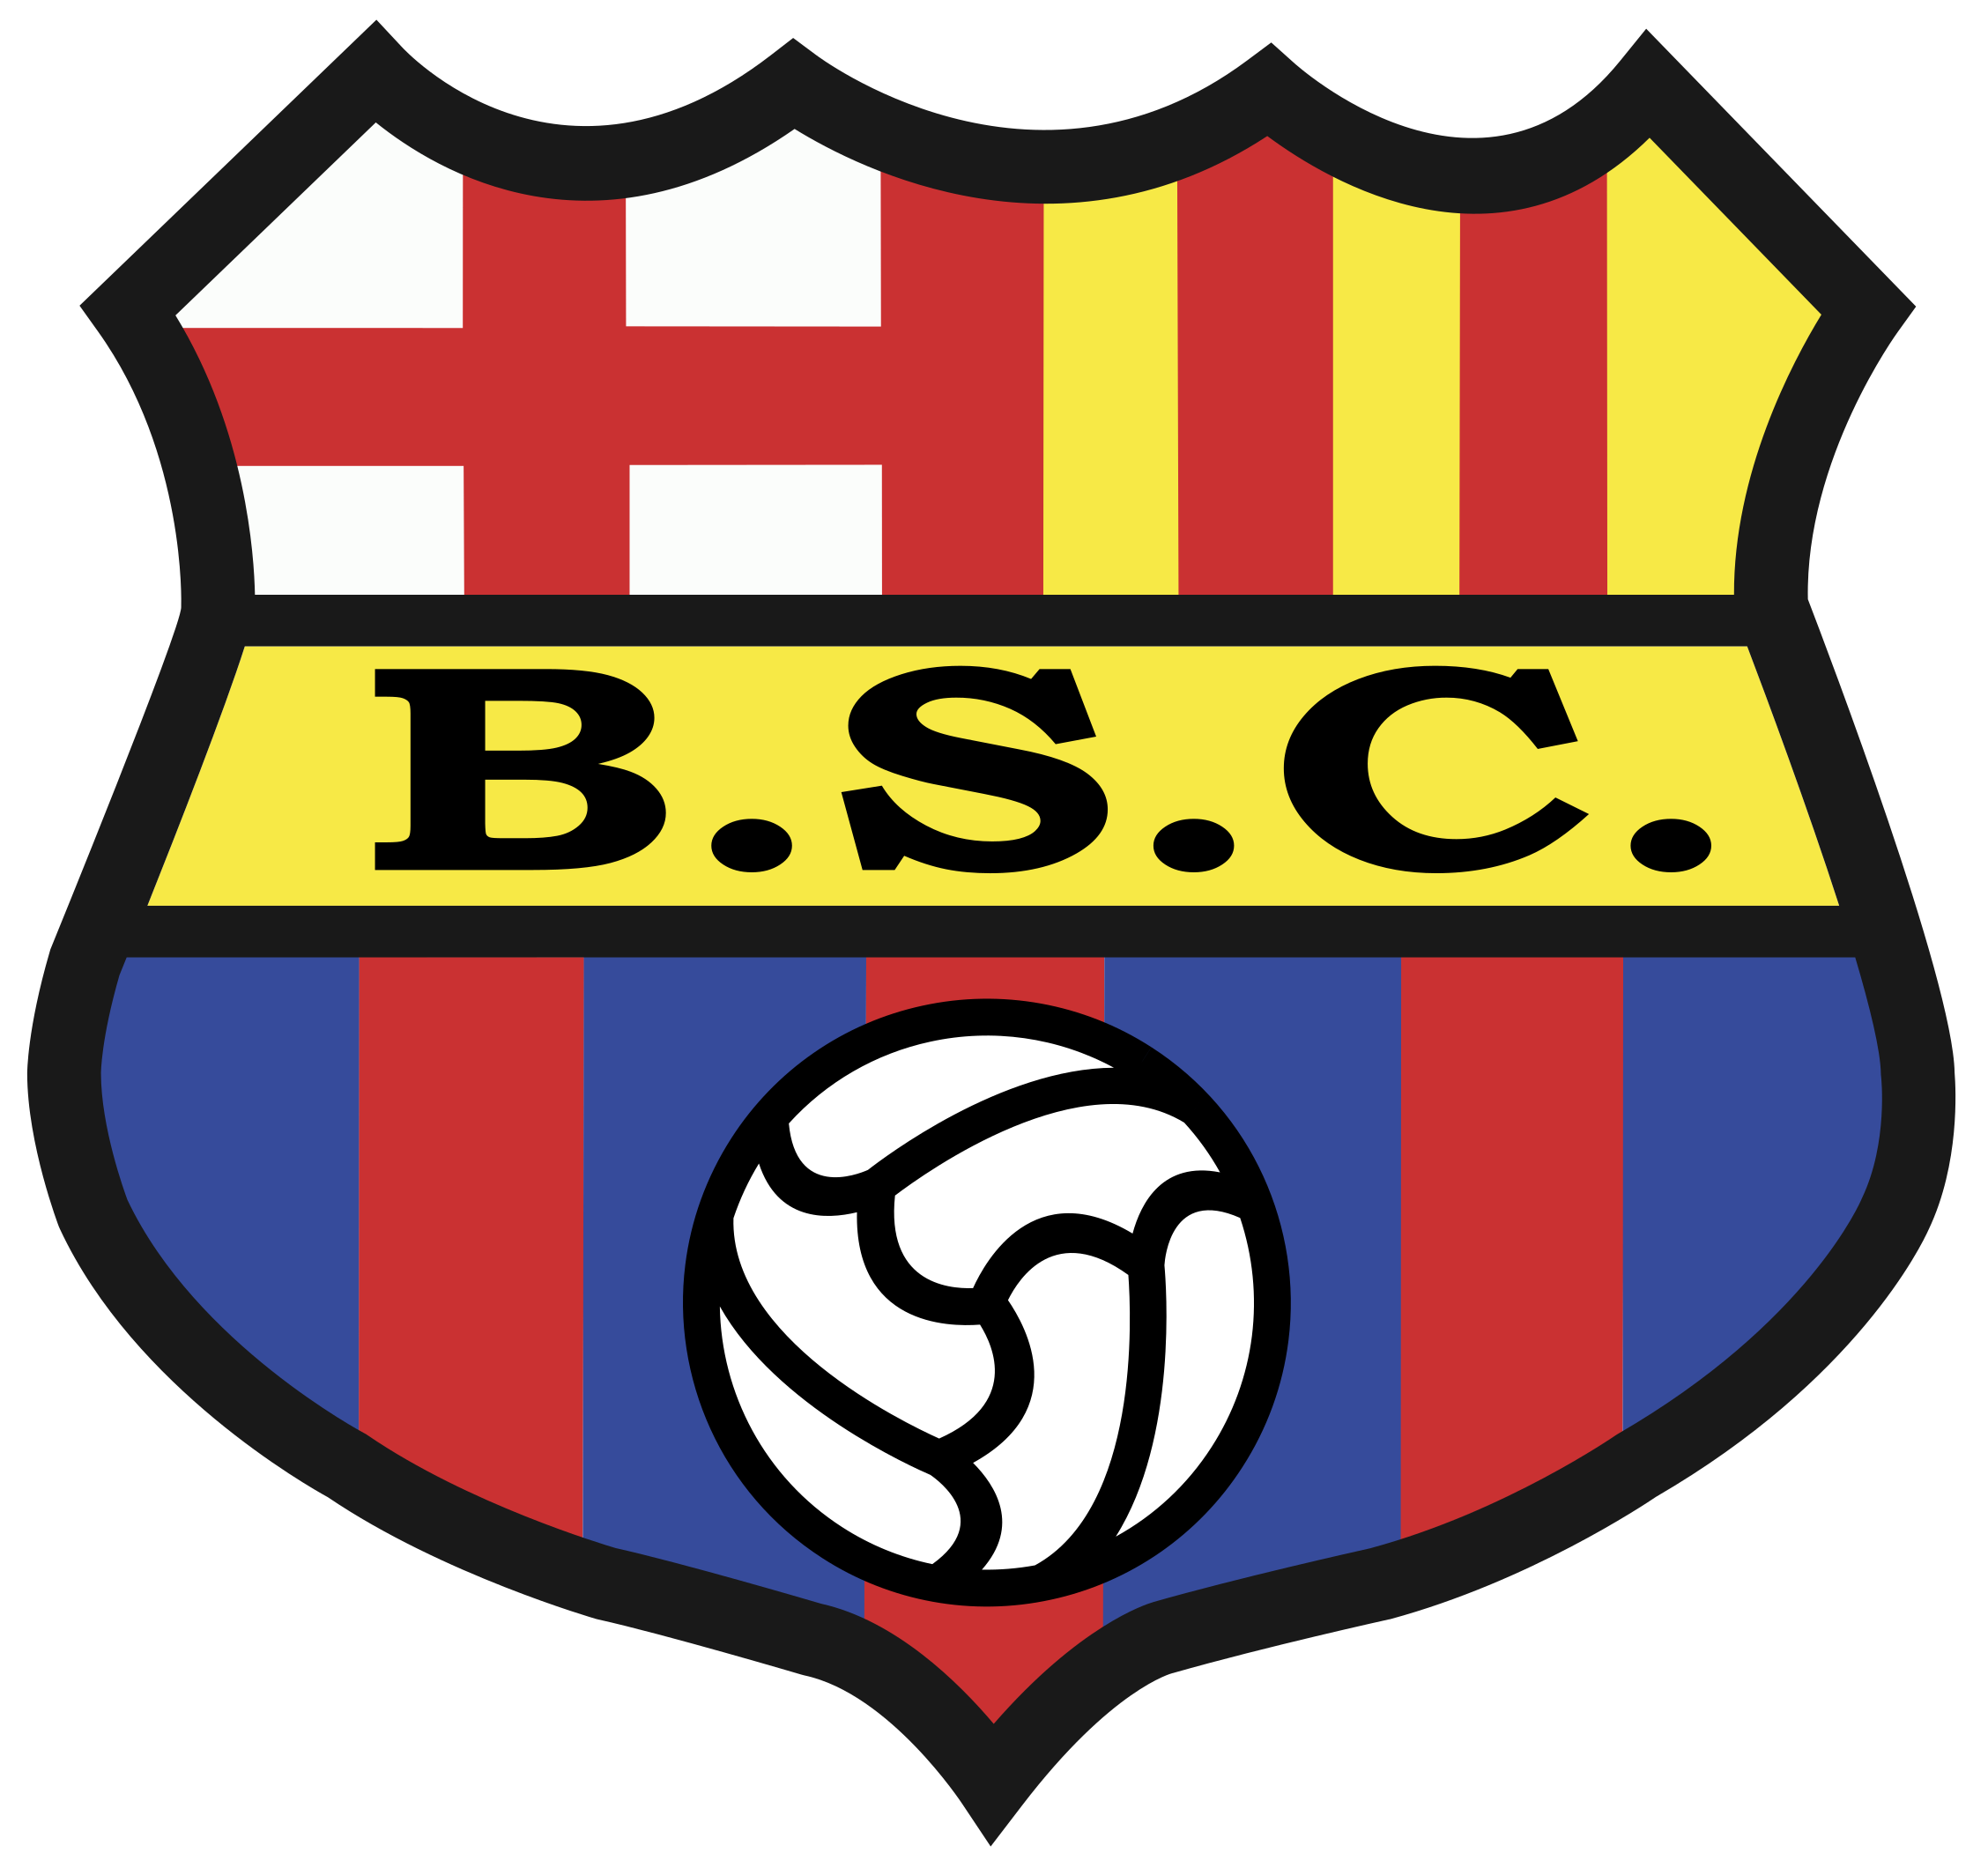 Barcelona SC vs LDU Quito Prediction: Both teams will strike to score